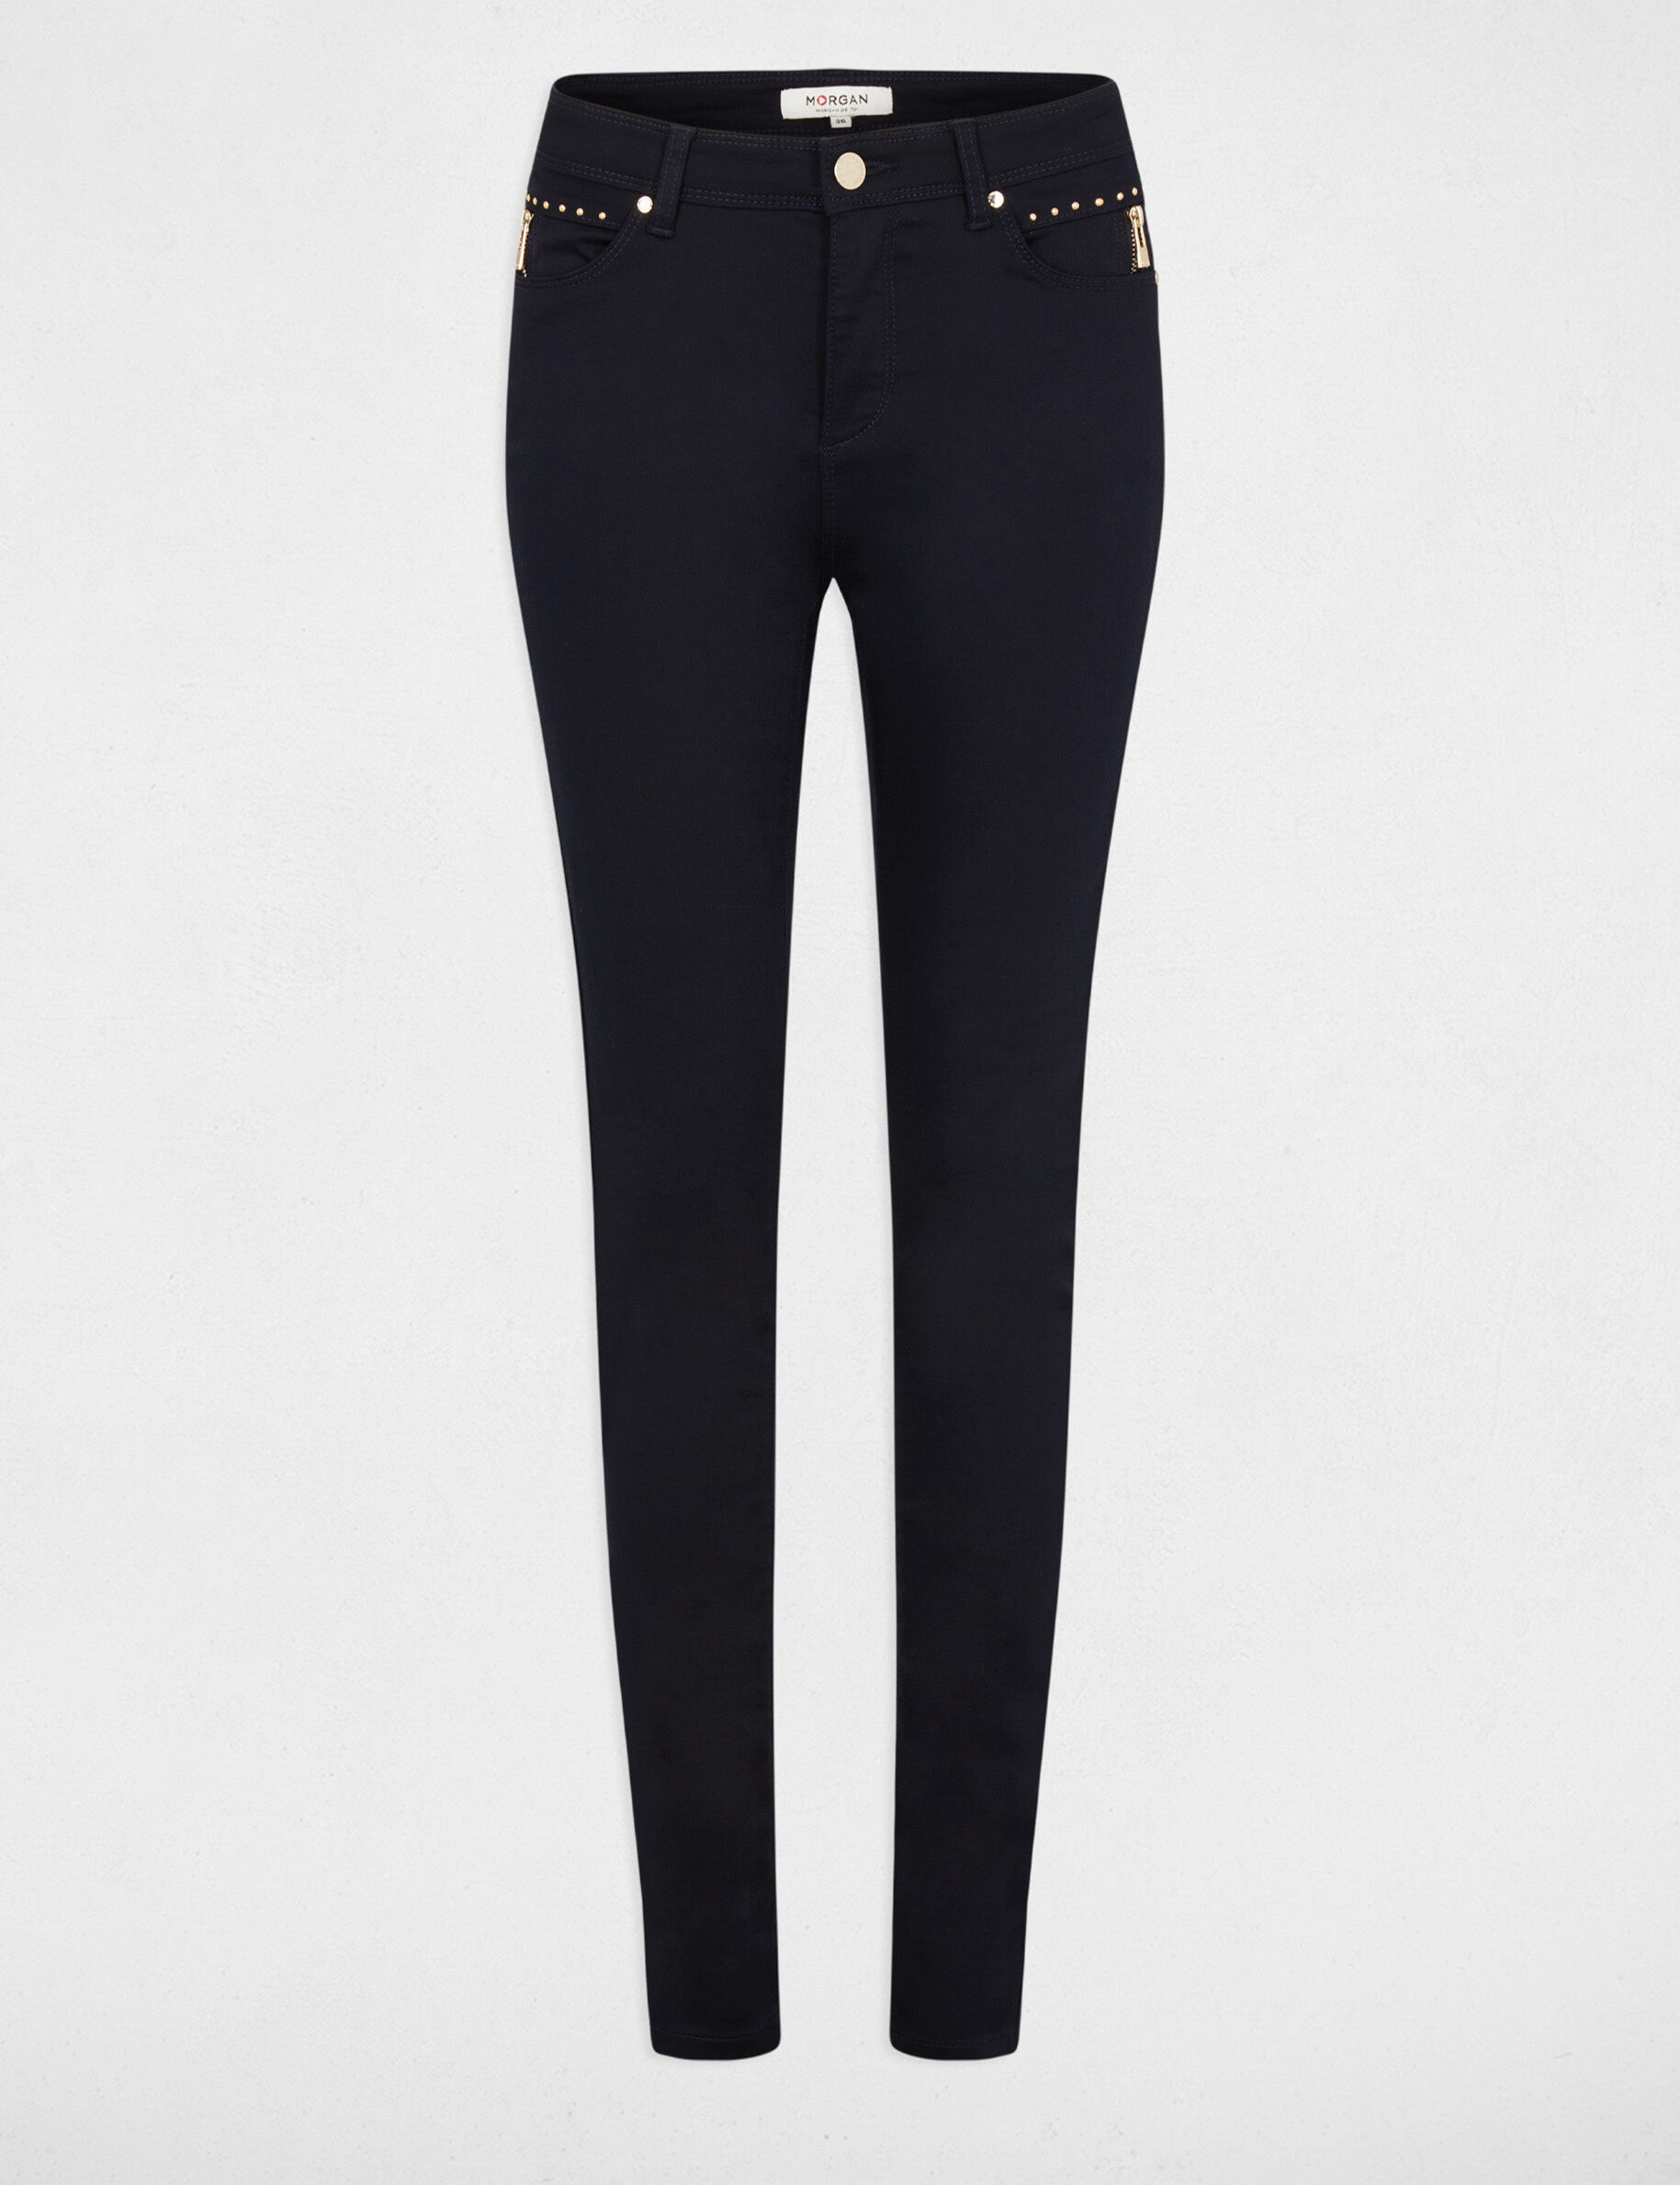 Buy Crimsoune Club Womens Navy Blue Slim Trouser online